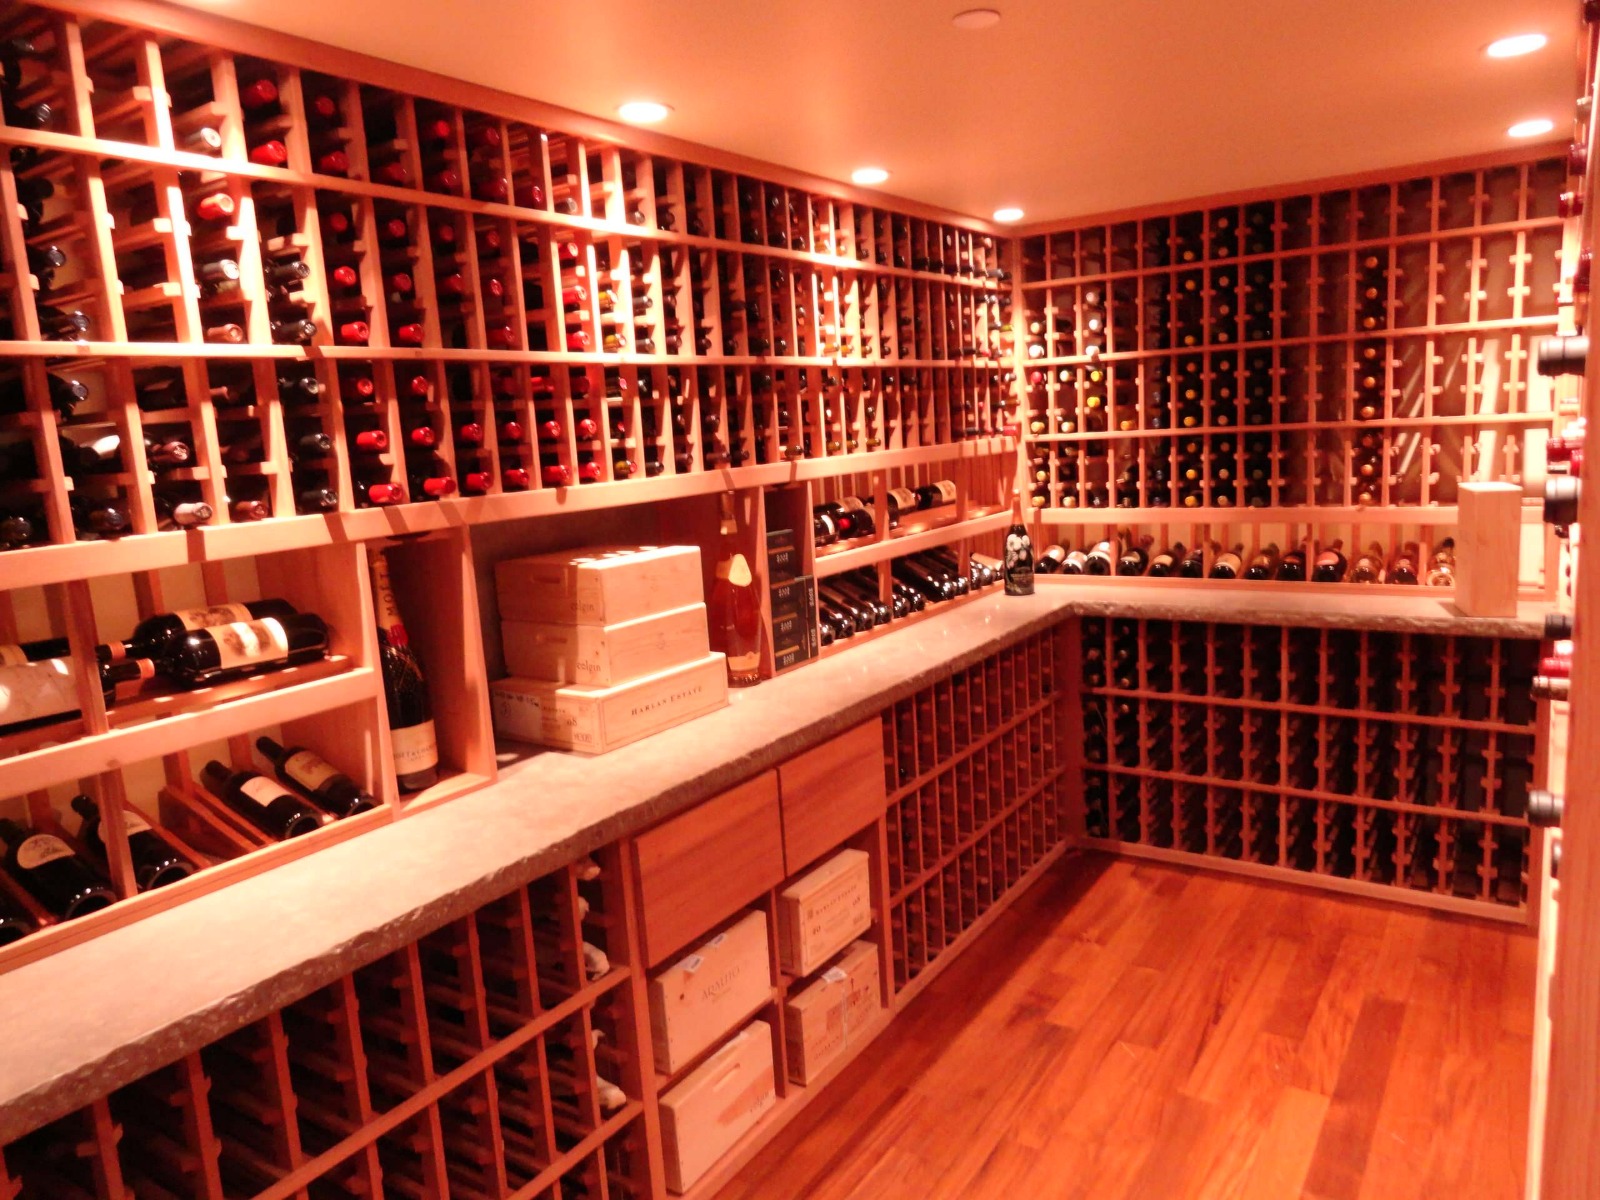 Large amount of bottle storage with minimal wine displays and case storage